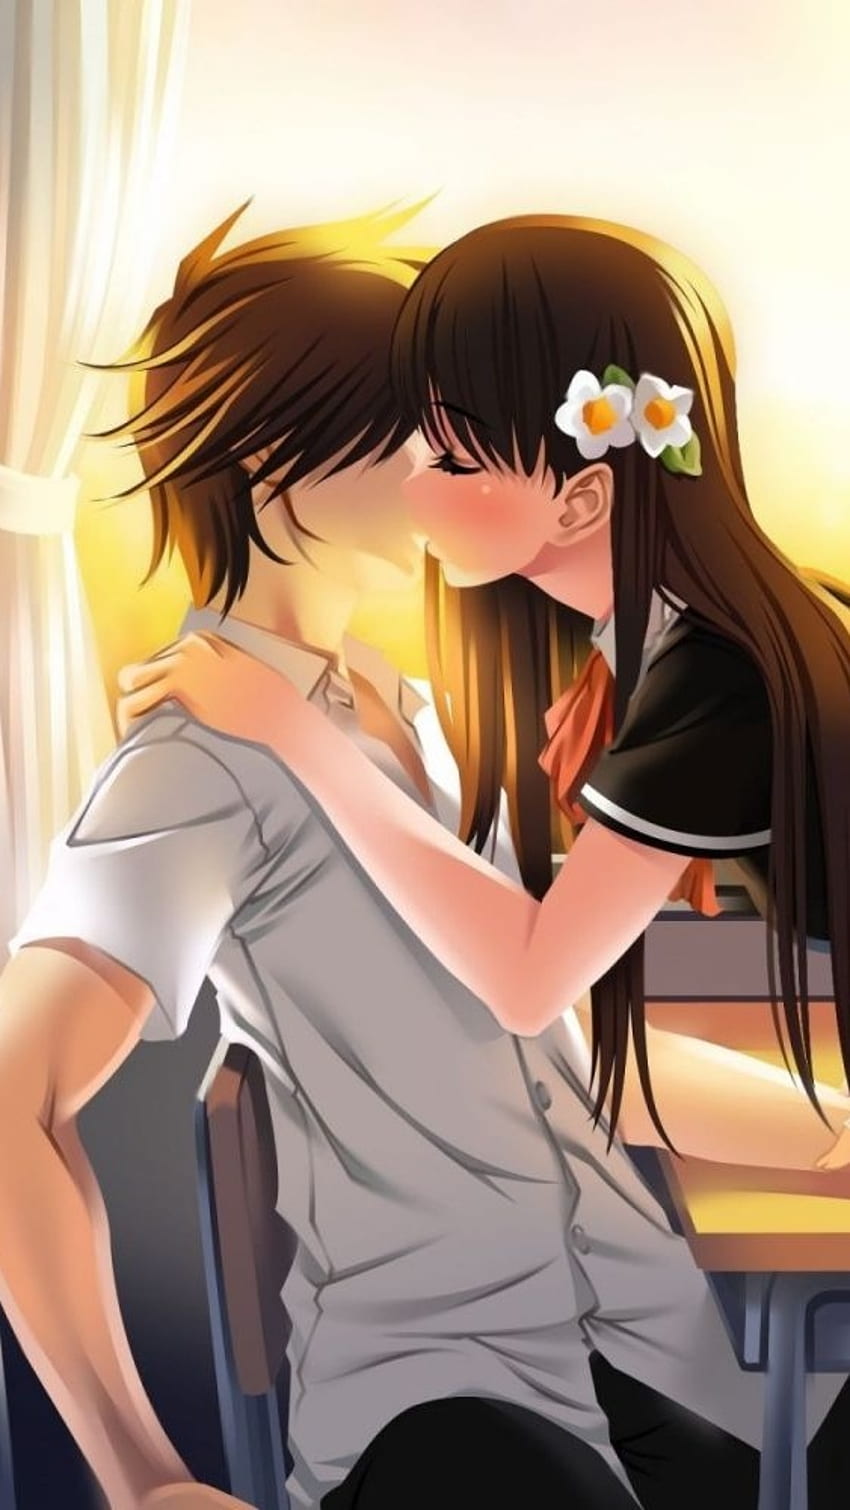 Kiss Anime couple . updated their... - Kiss Anime couple .